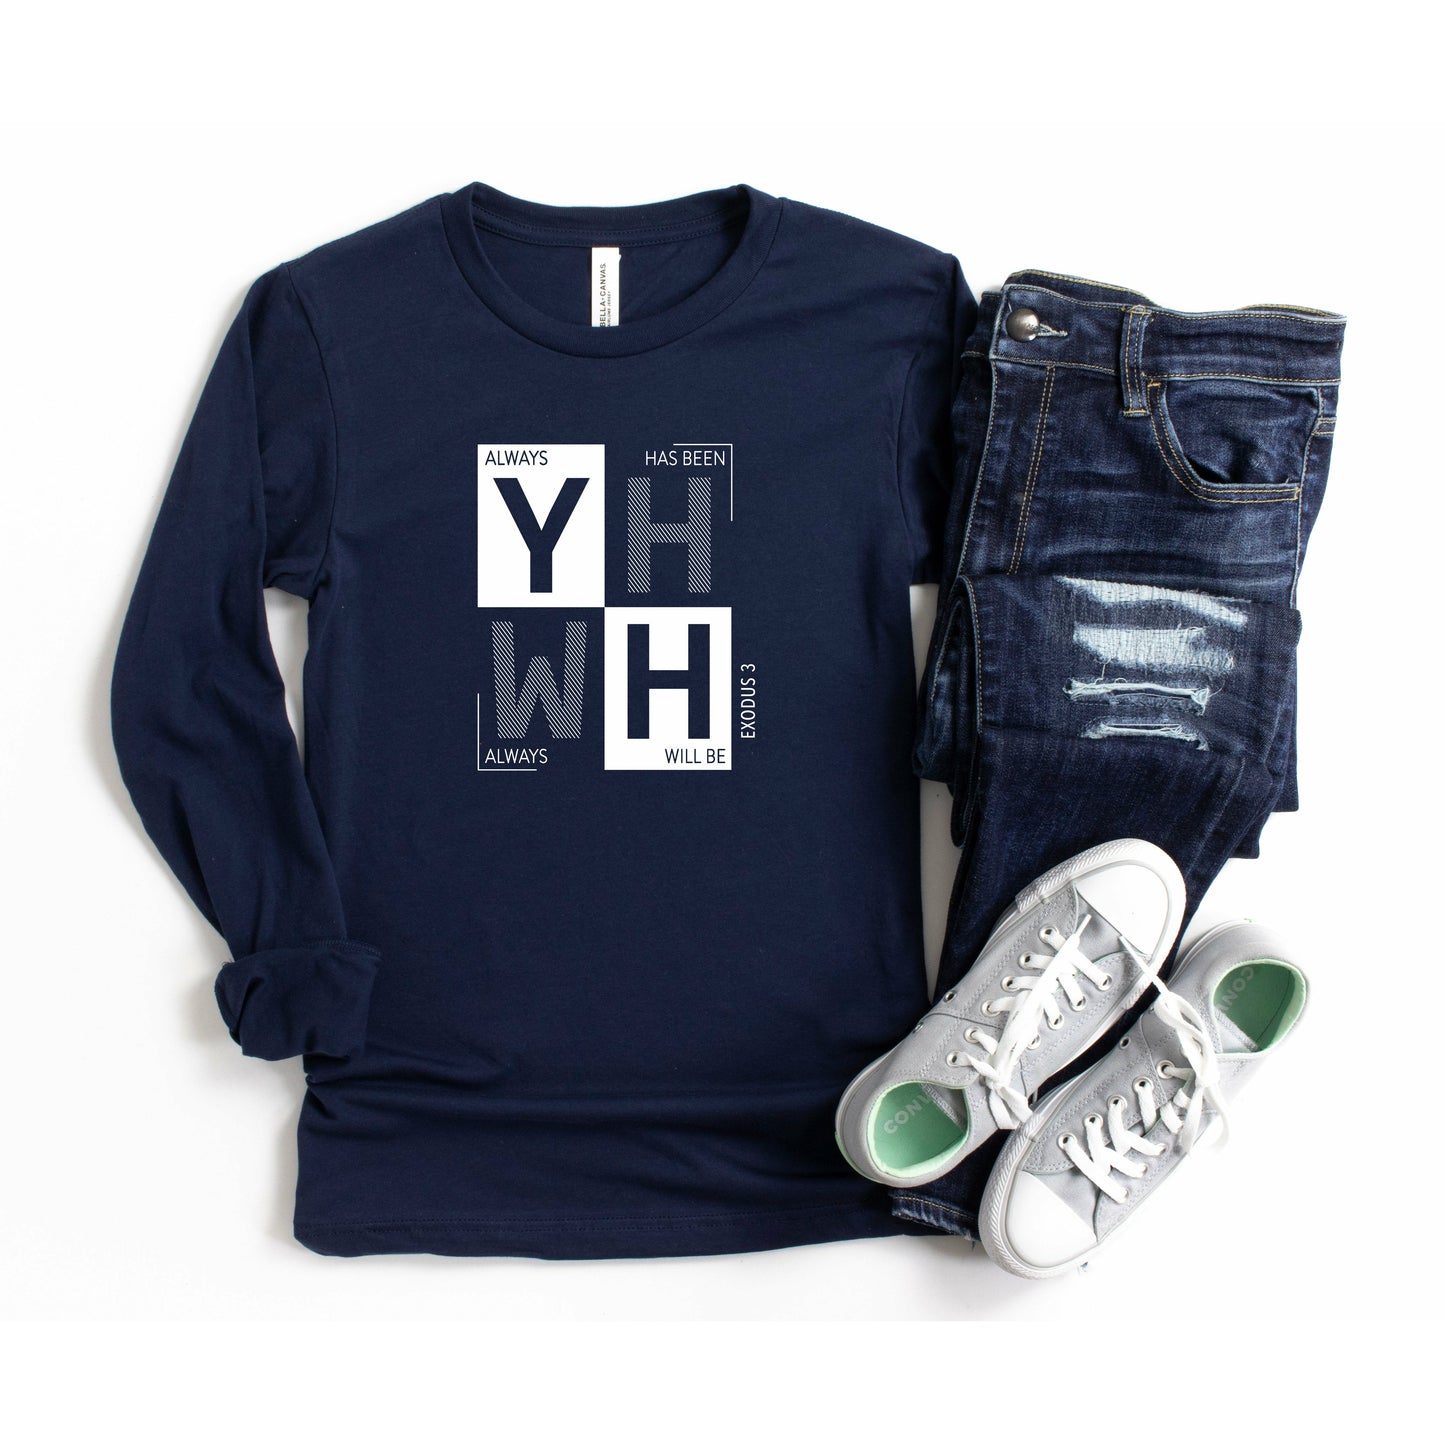 YHWH / Yahweh | Long Sleeve Shirt for Men & Women